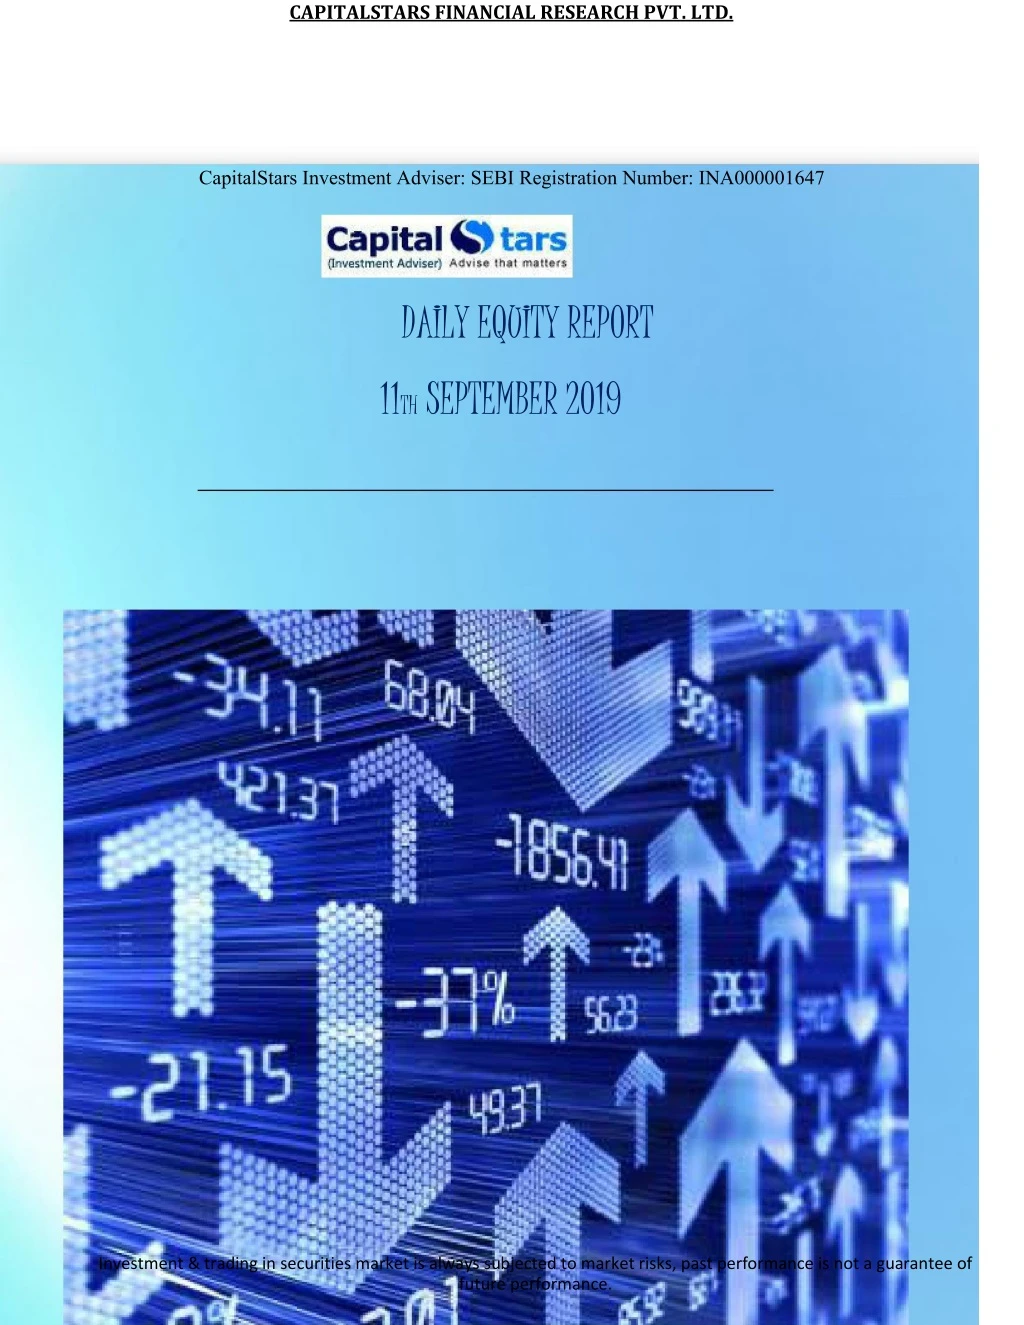 capitalstars financial research pvt ltd